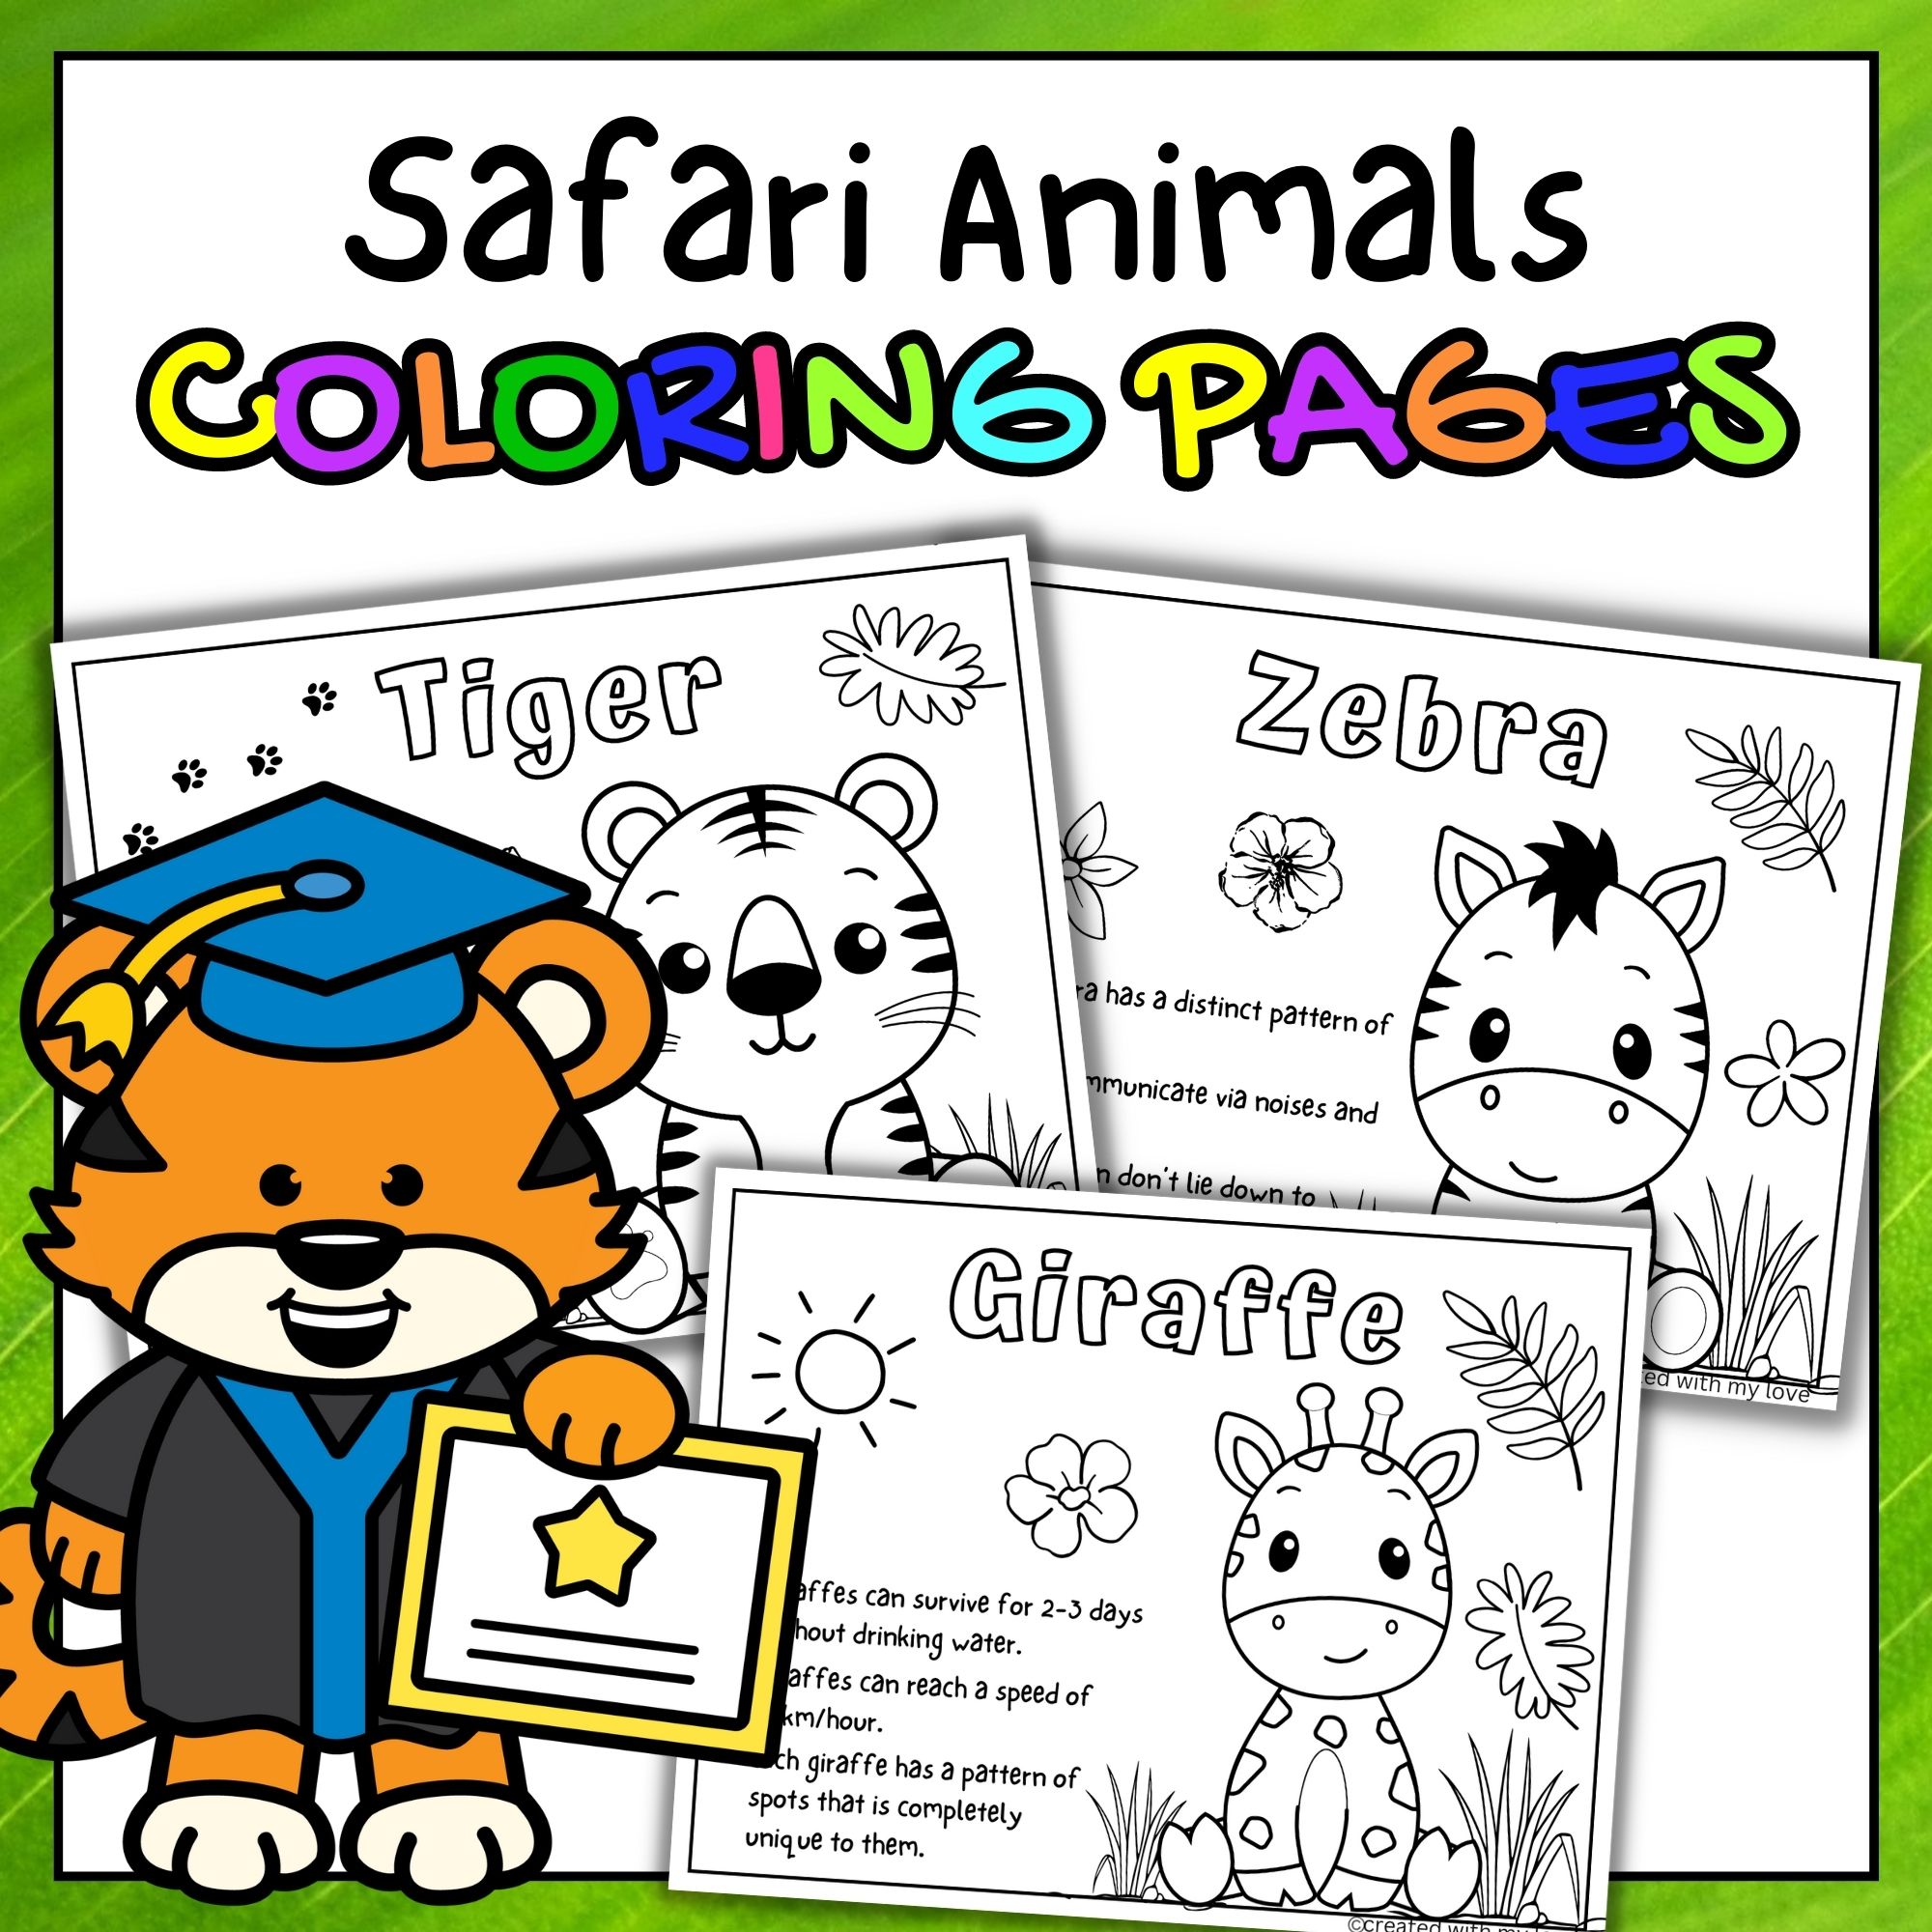 Safari animals coloring pages